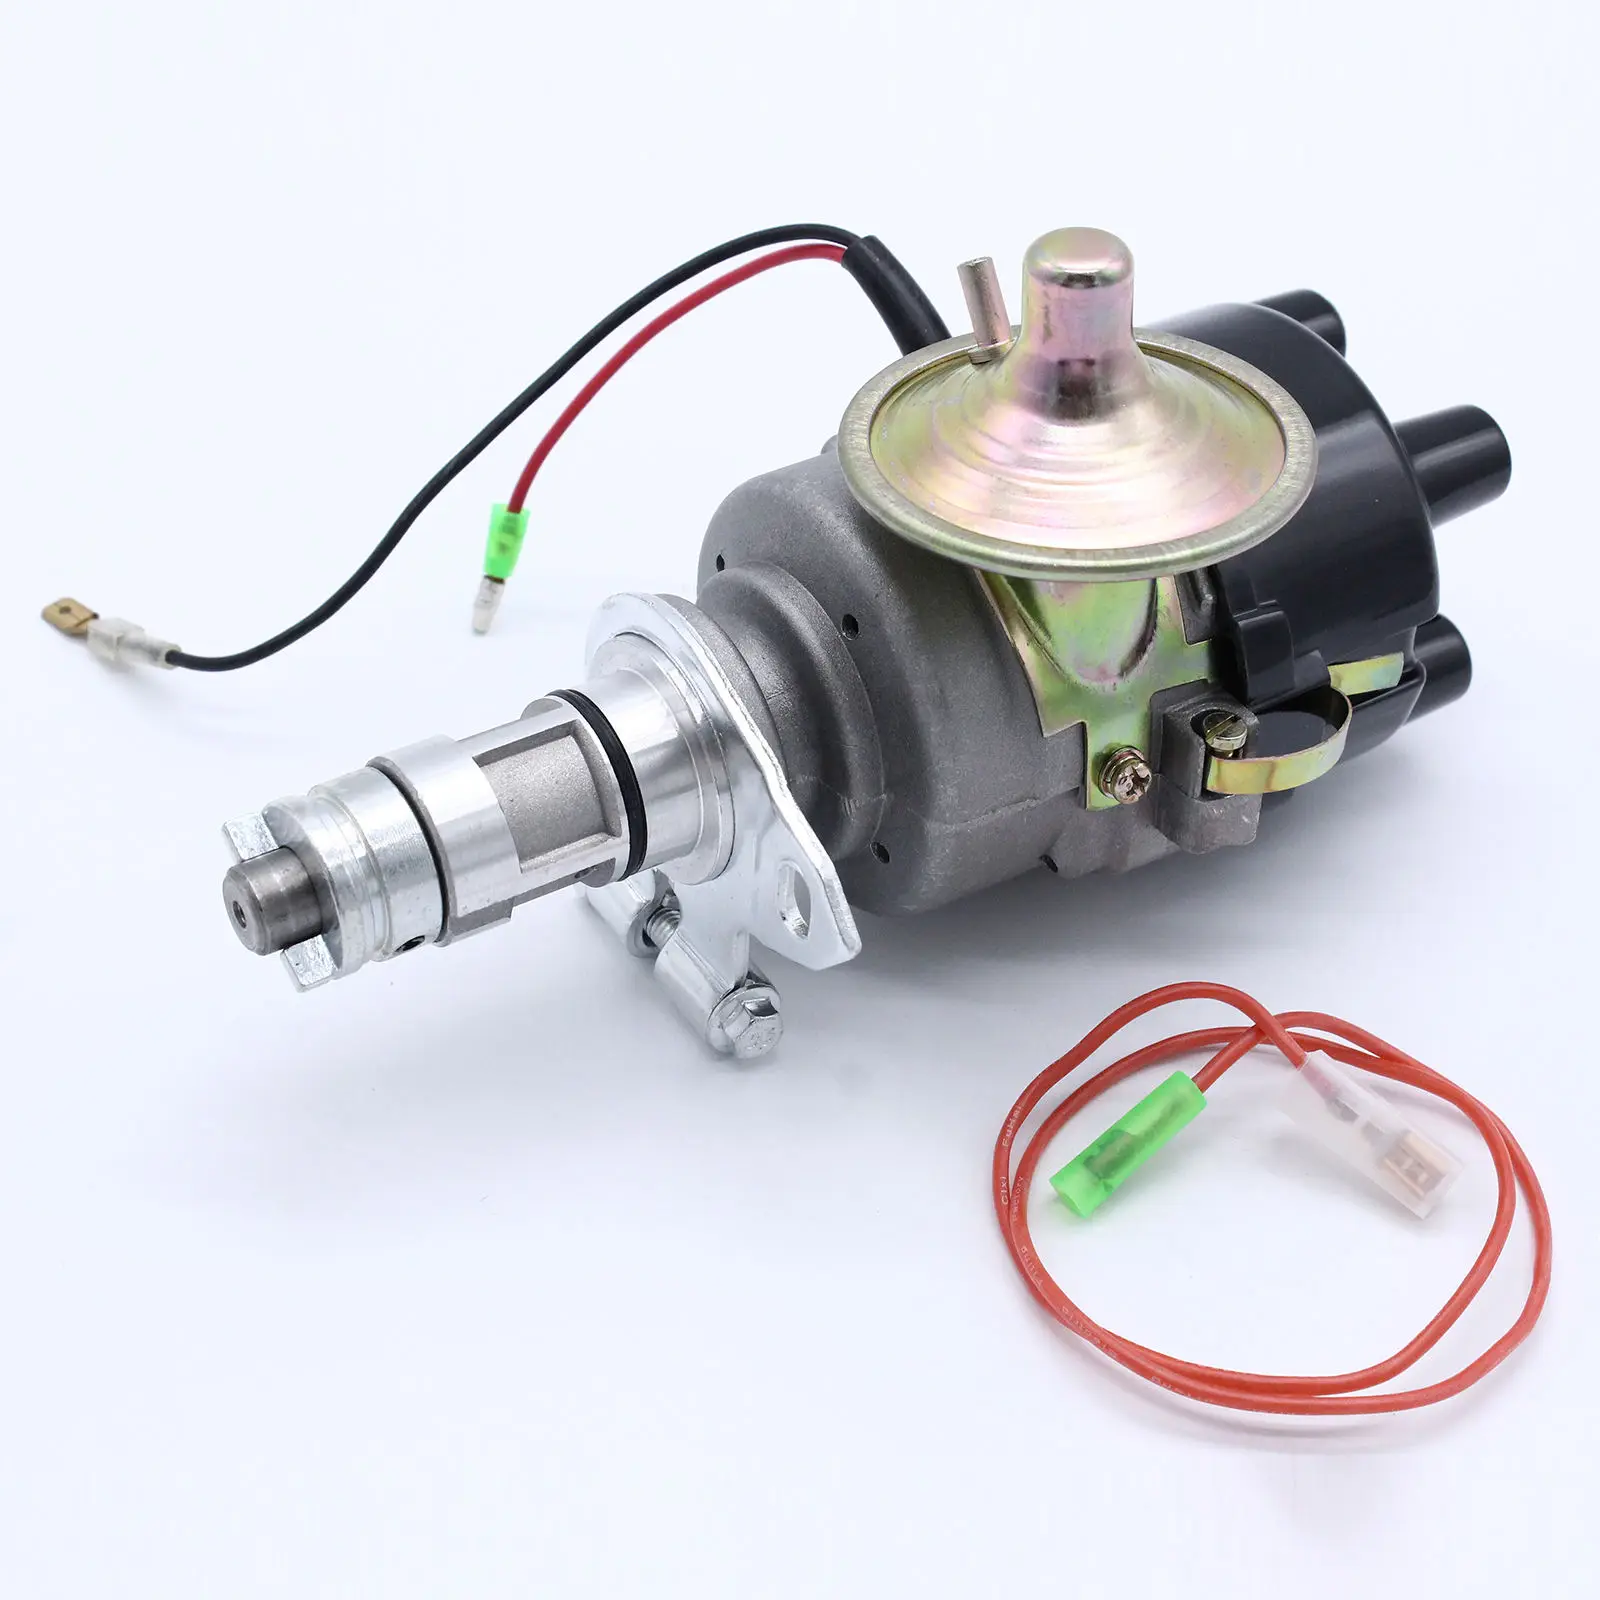 Aluminium Alloy Automotive Car Electronic Conversion Kit Electronic Distributor Replacement for Lucas 45D 25D